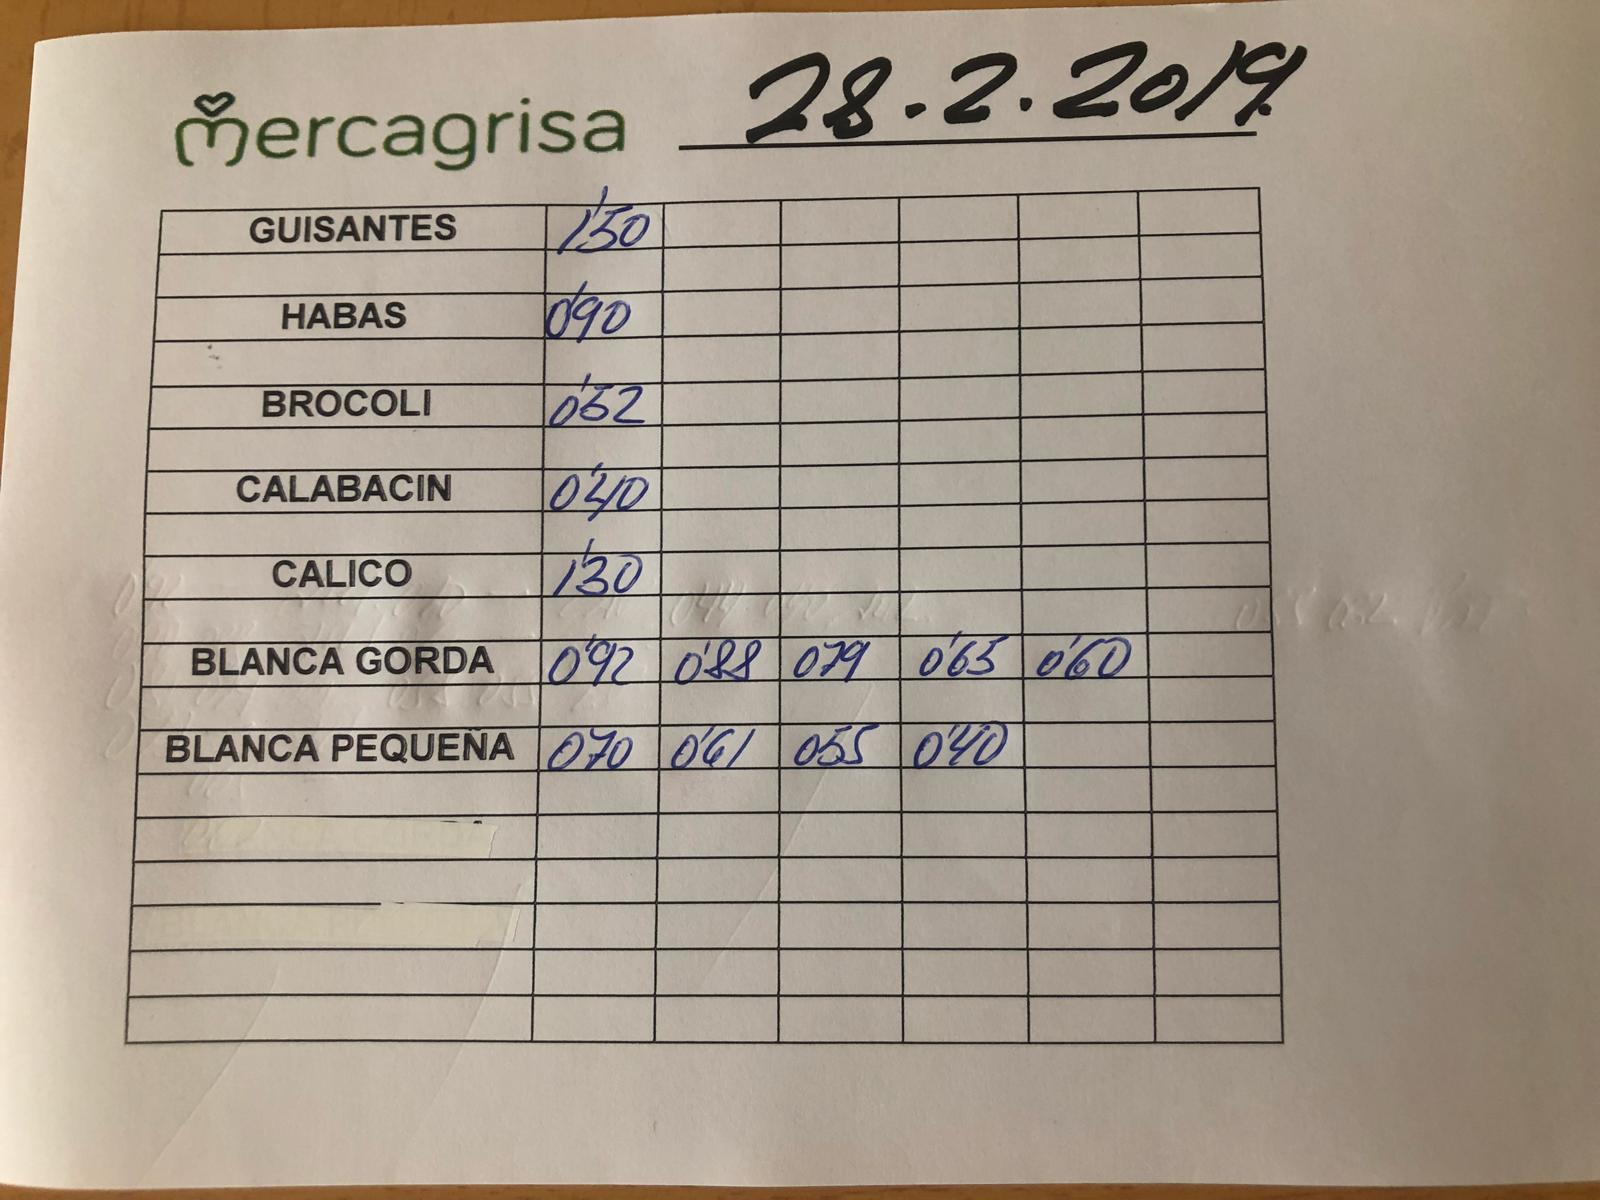 Subasta hortofrutícola Mercagrisa 28 de Febrero 2019